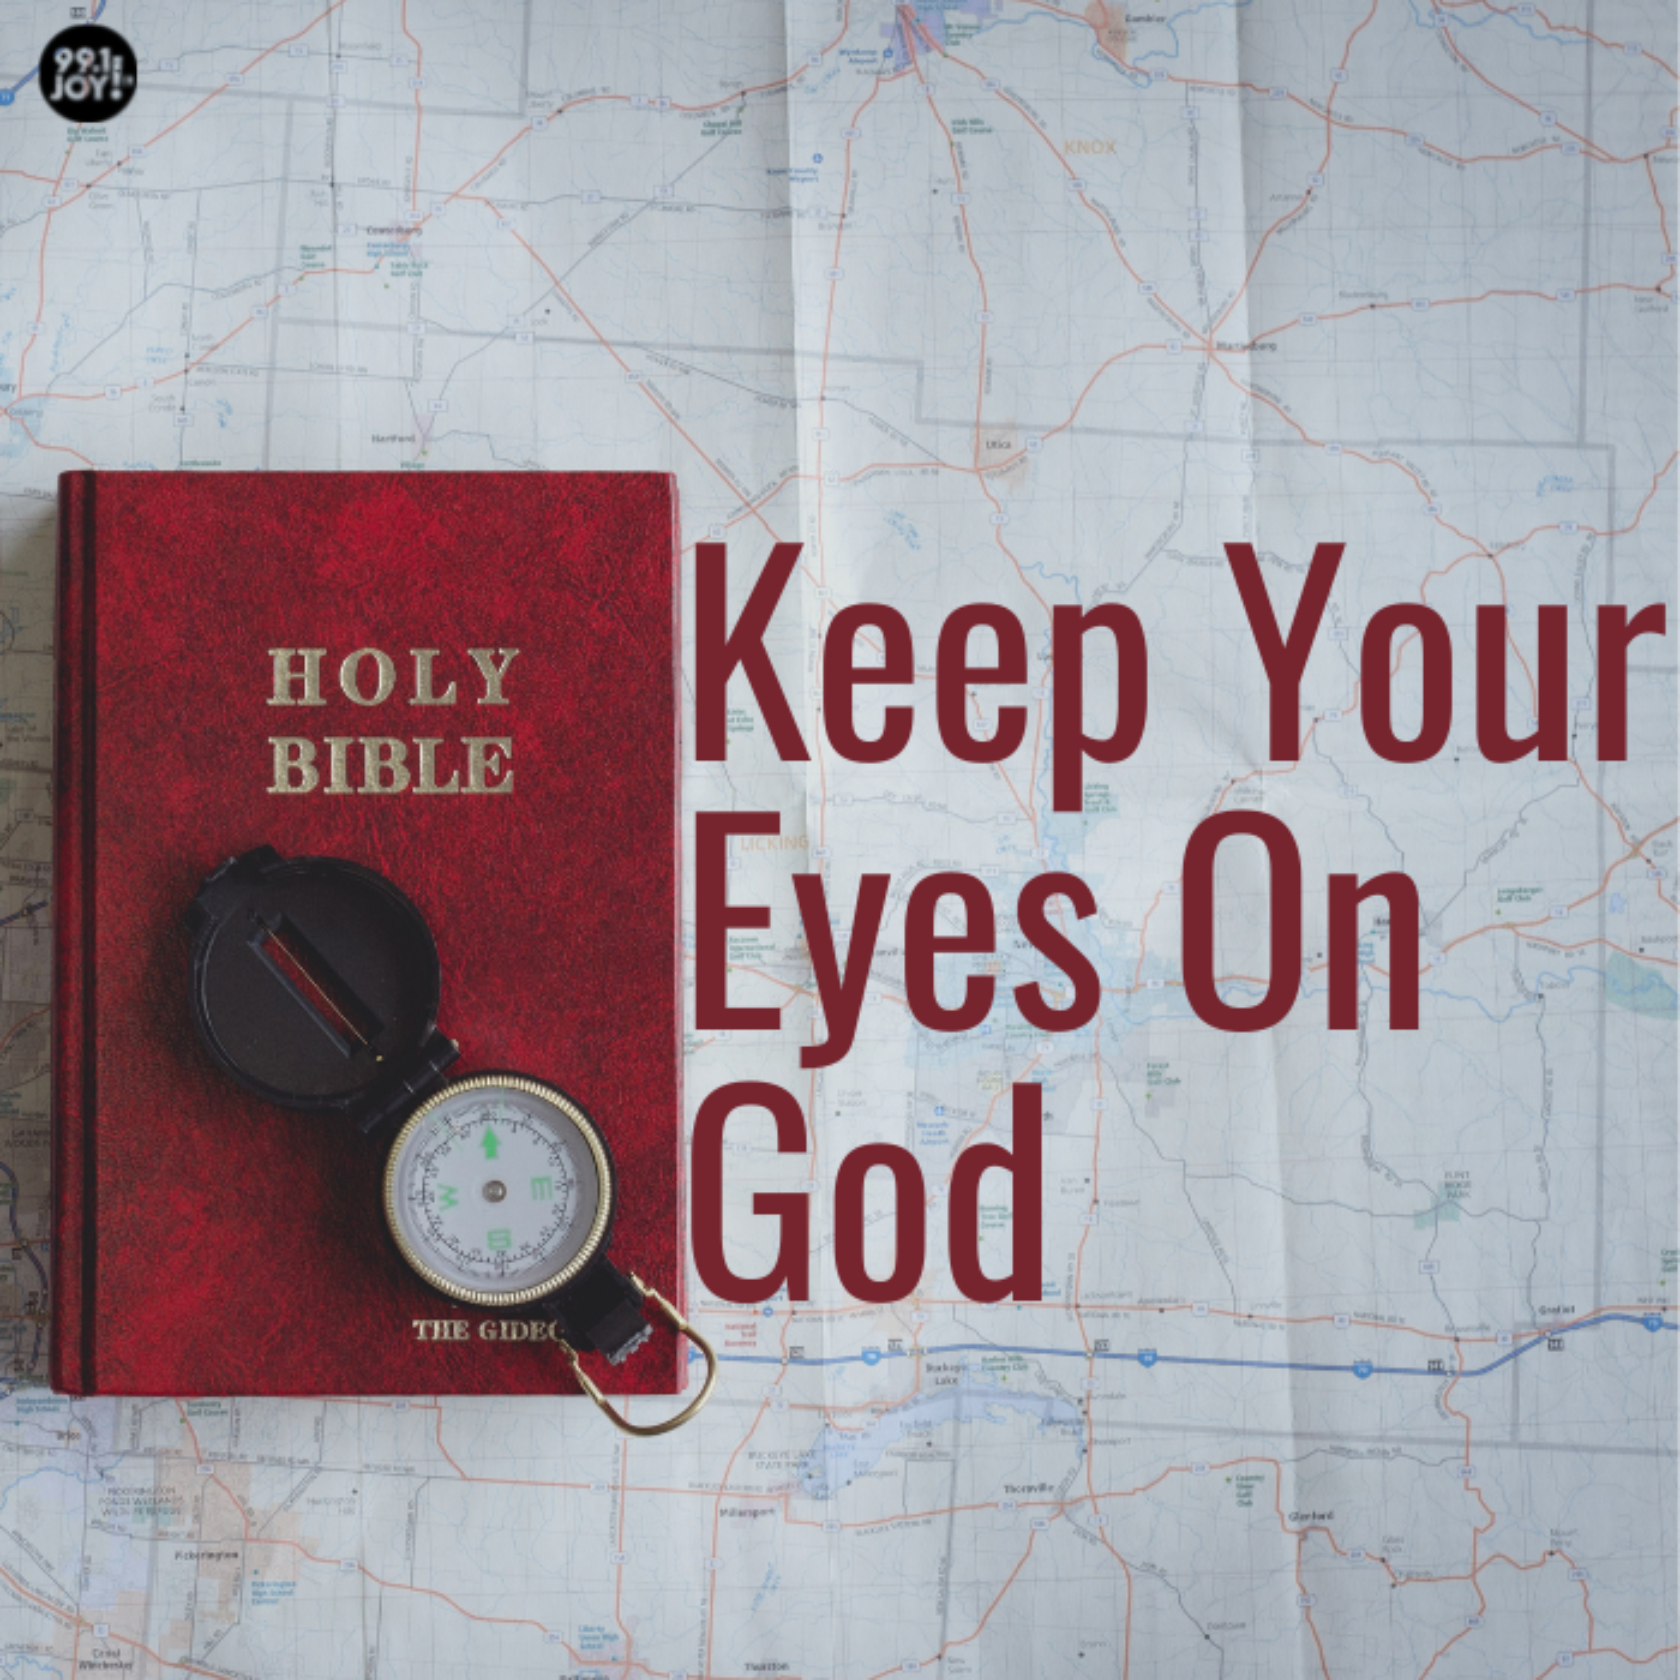 Keep Your Eyes On God